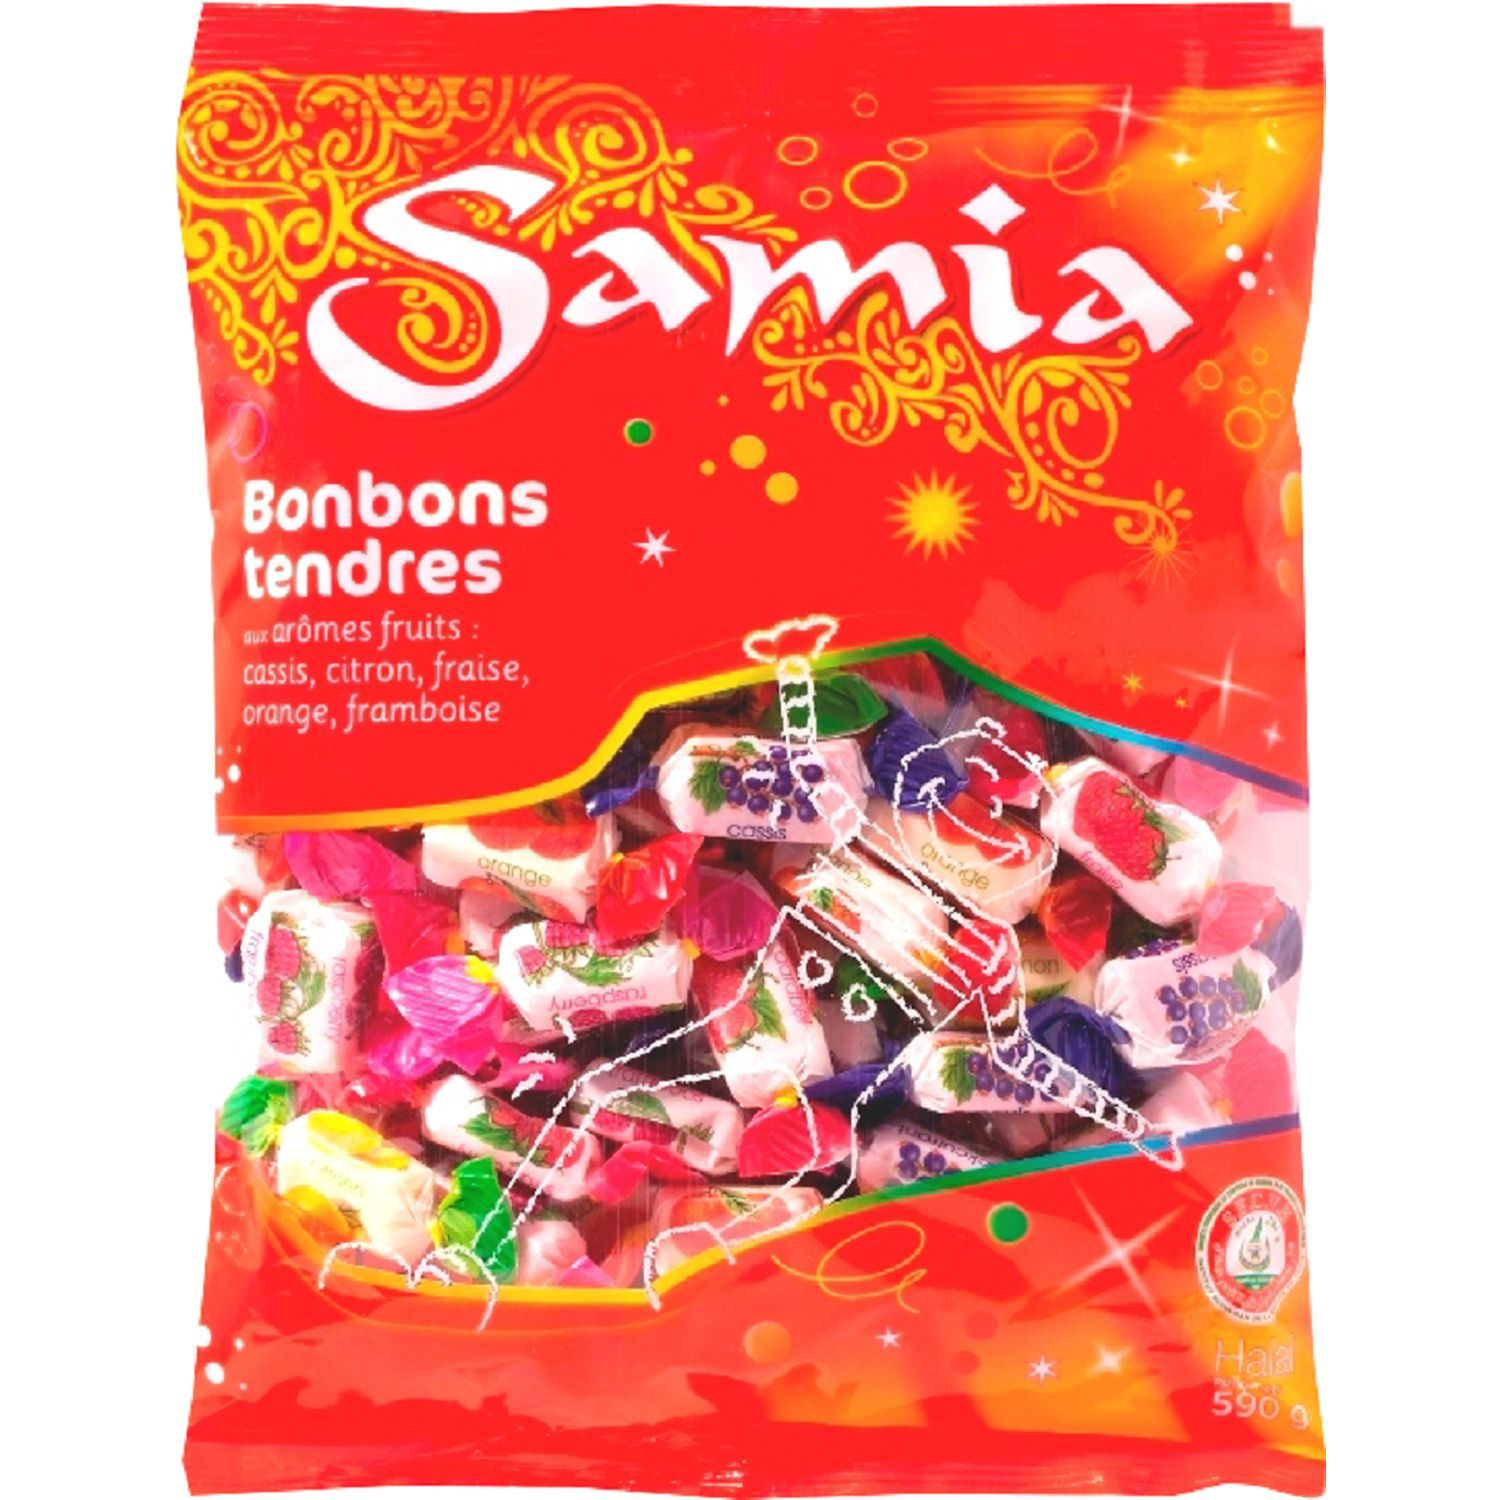 SAMIA Bonbons tendres halal 590g pas cher 